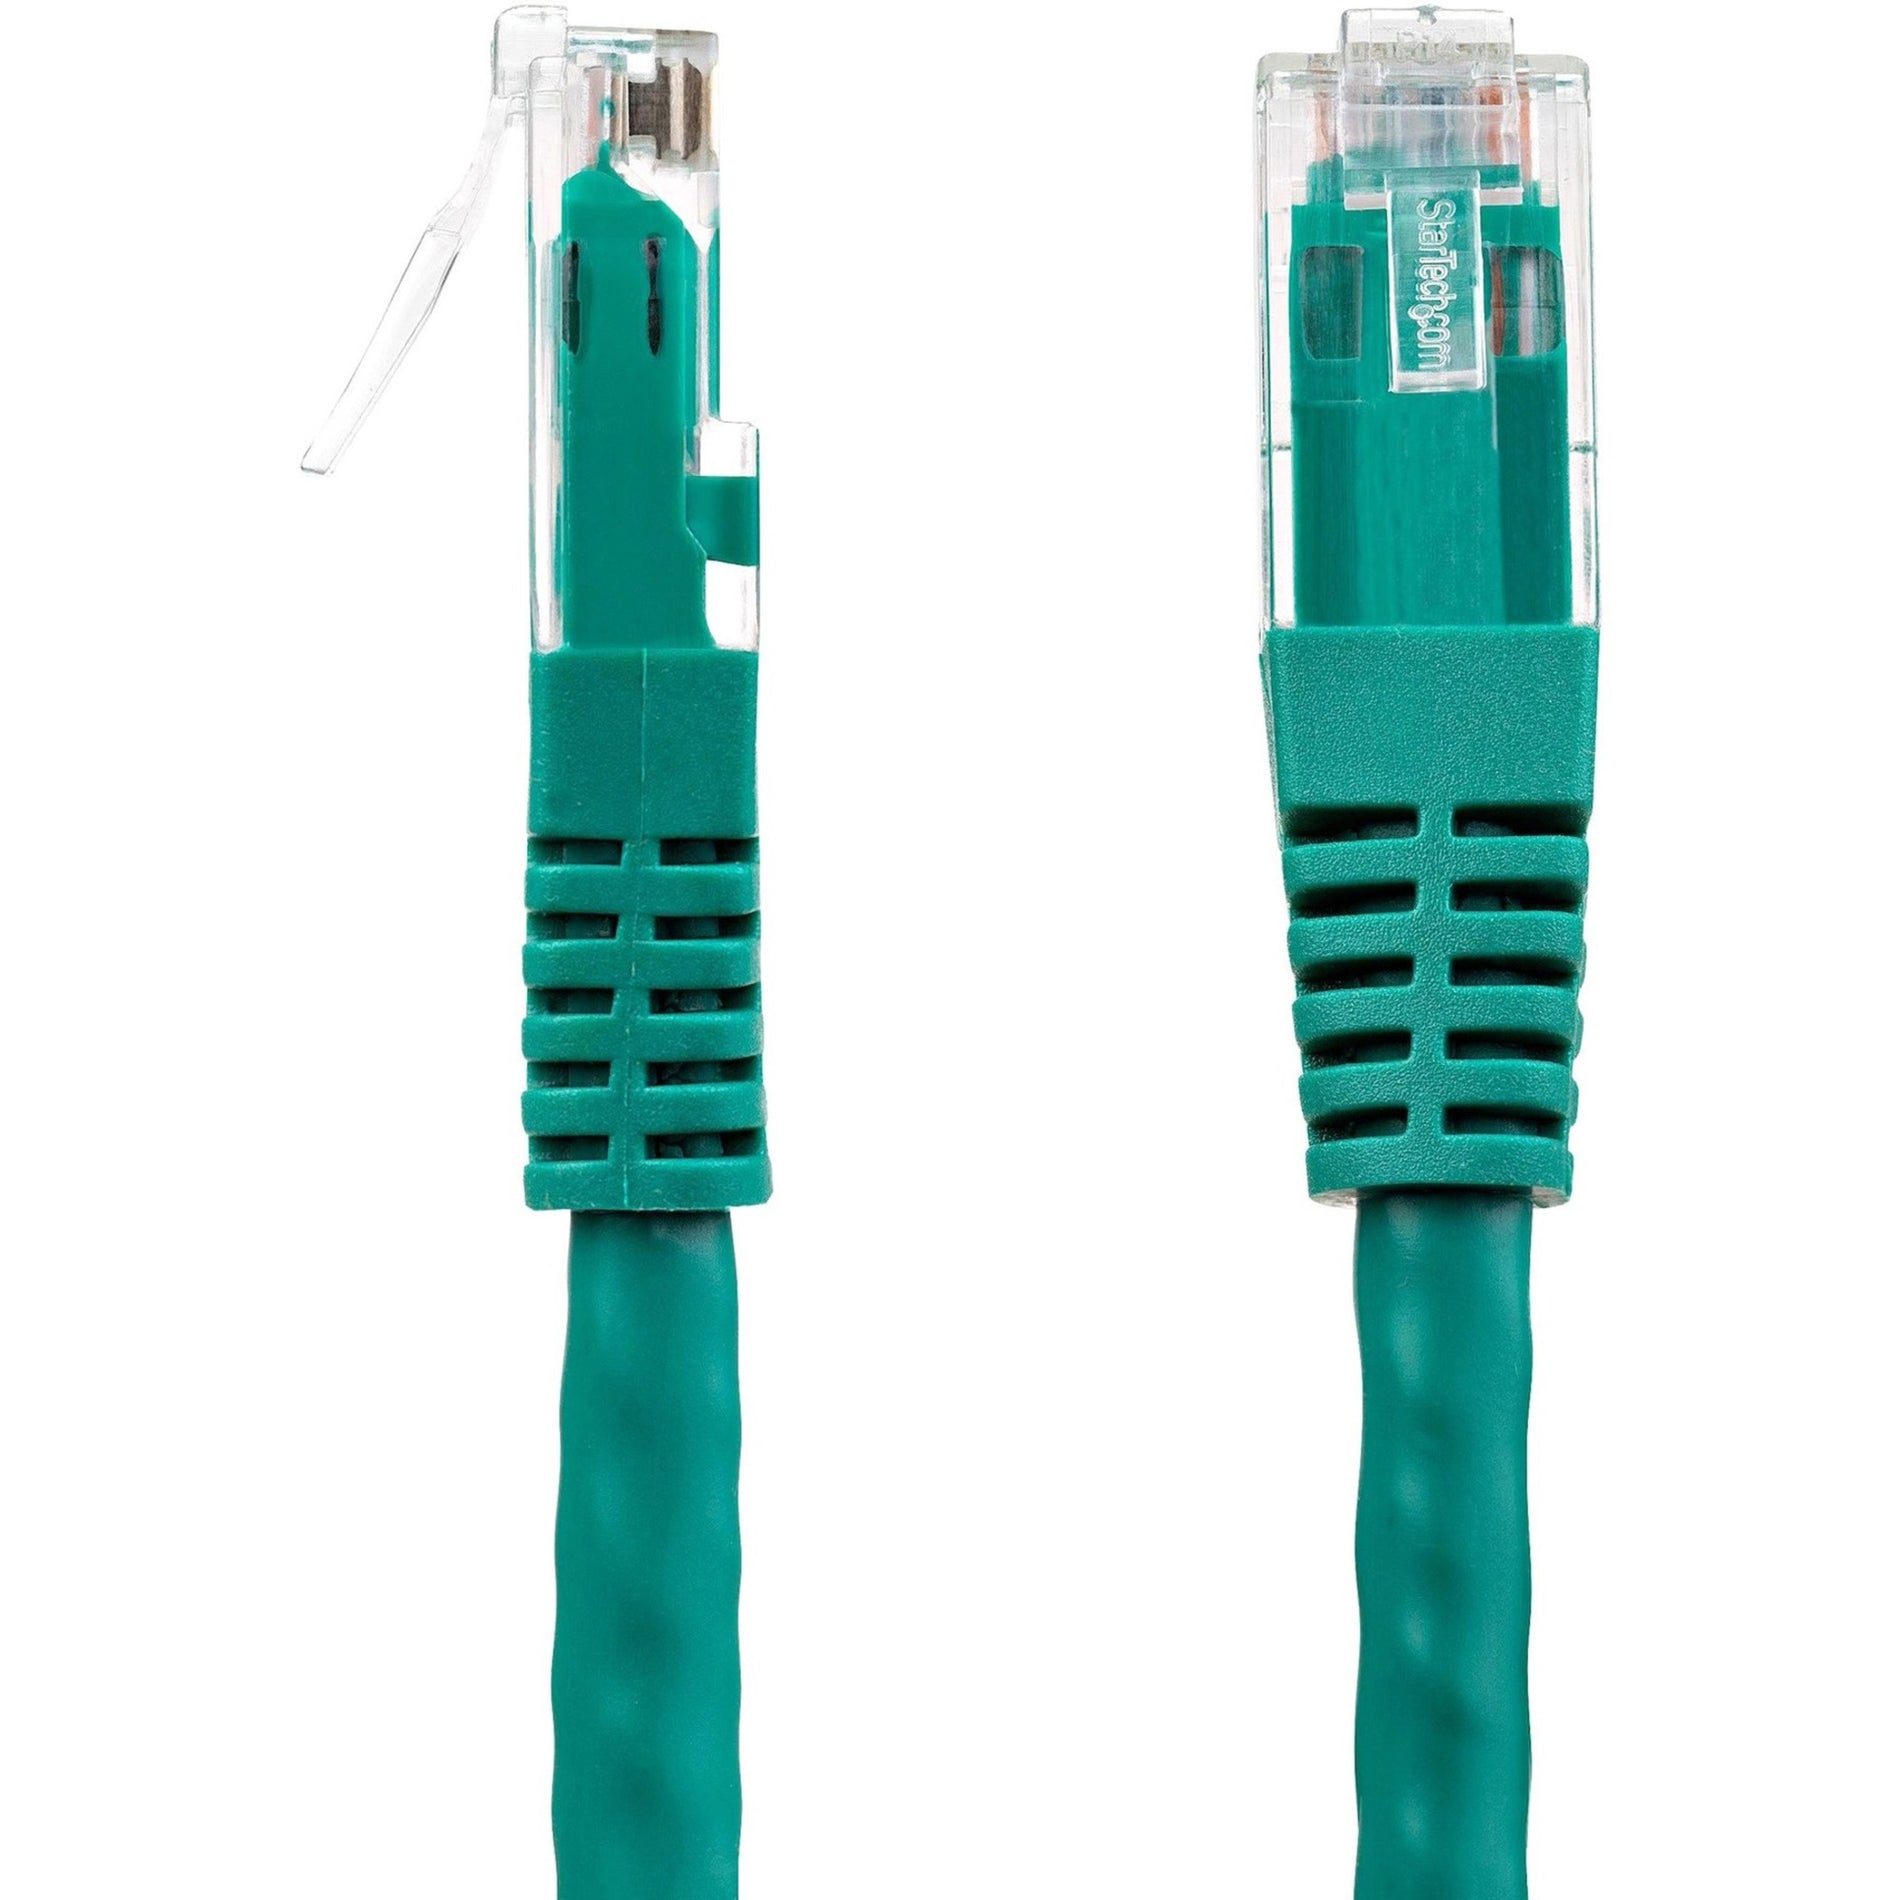 StarTech.com C6PATCH12GN 12ft Green Cat6 UTP Patch Cable ETL Verified, Molded, PoE, Strain Relief, Damage Resistant, Corrosion Resistant